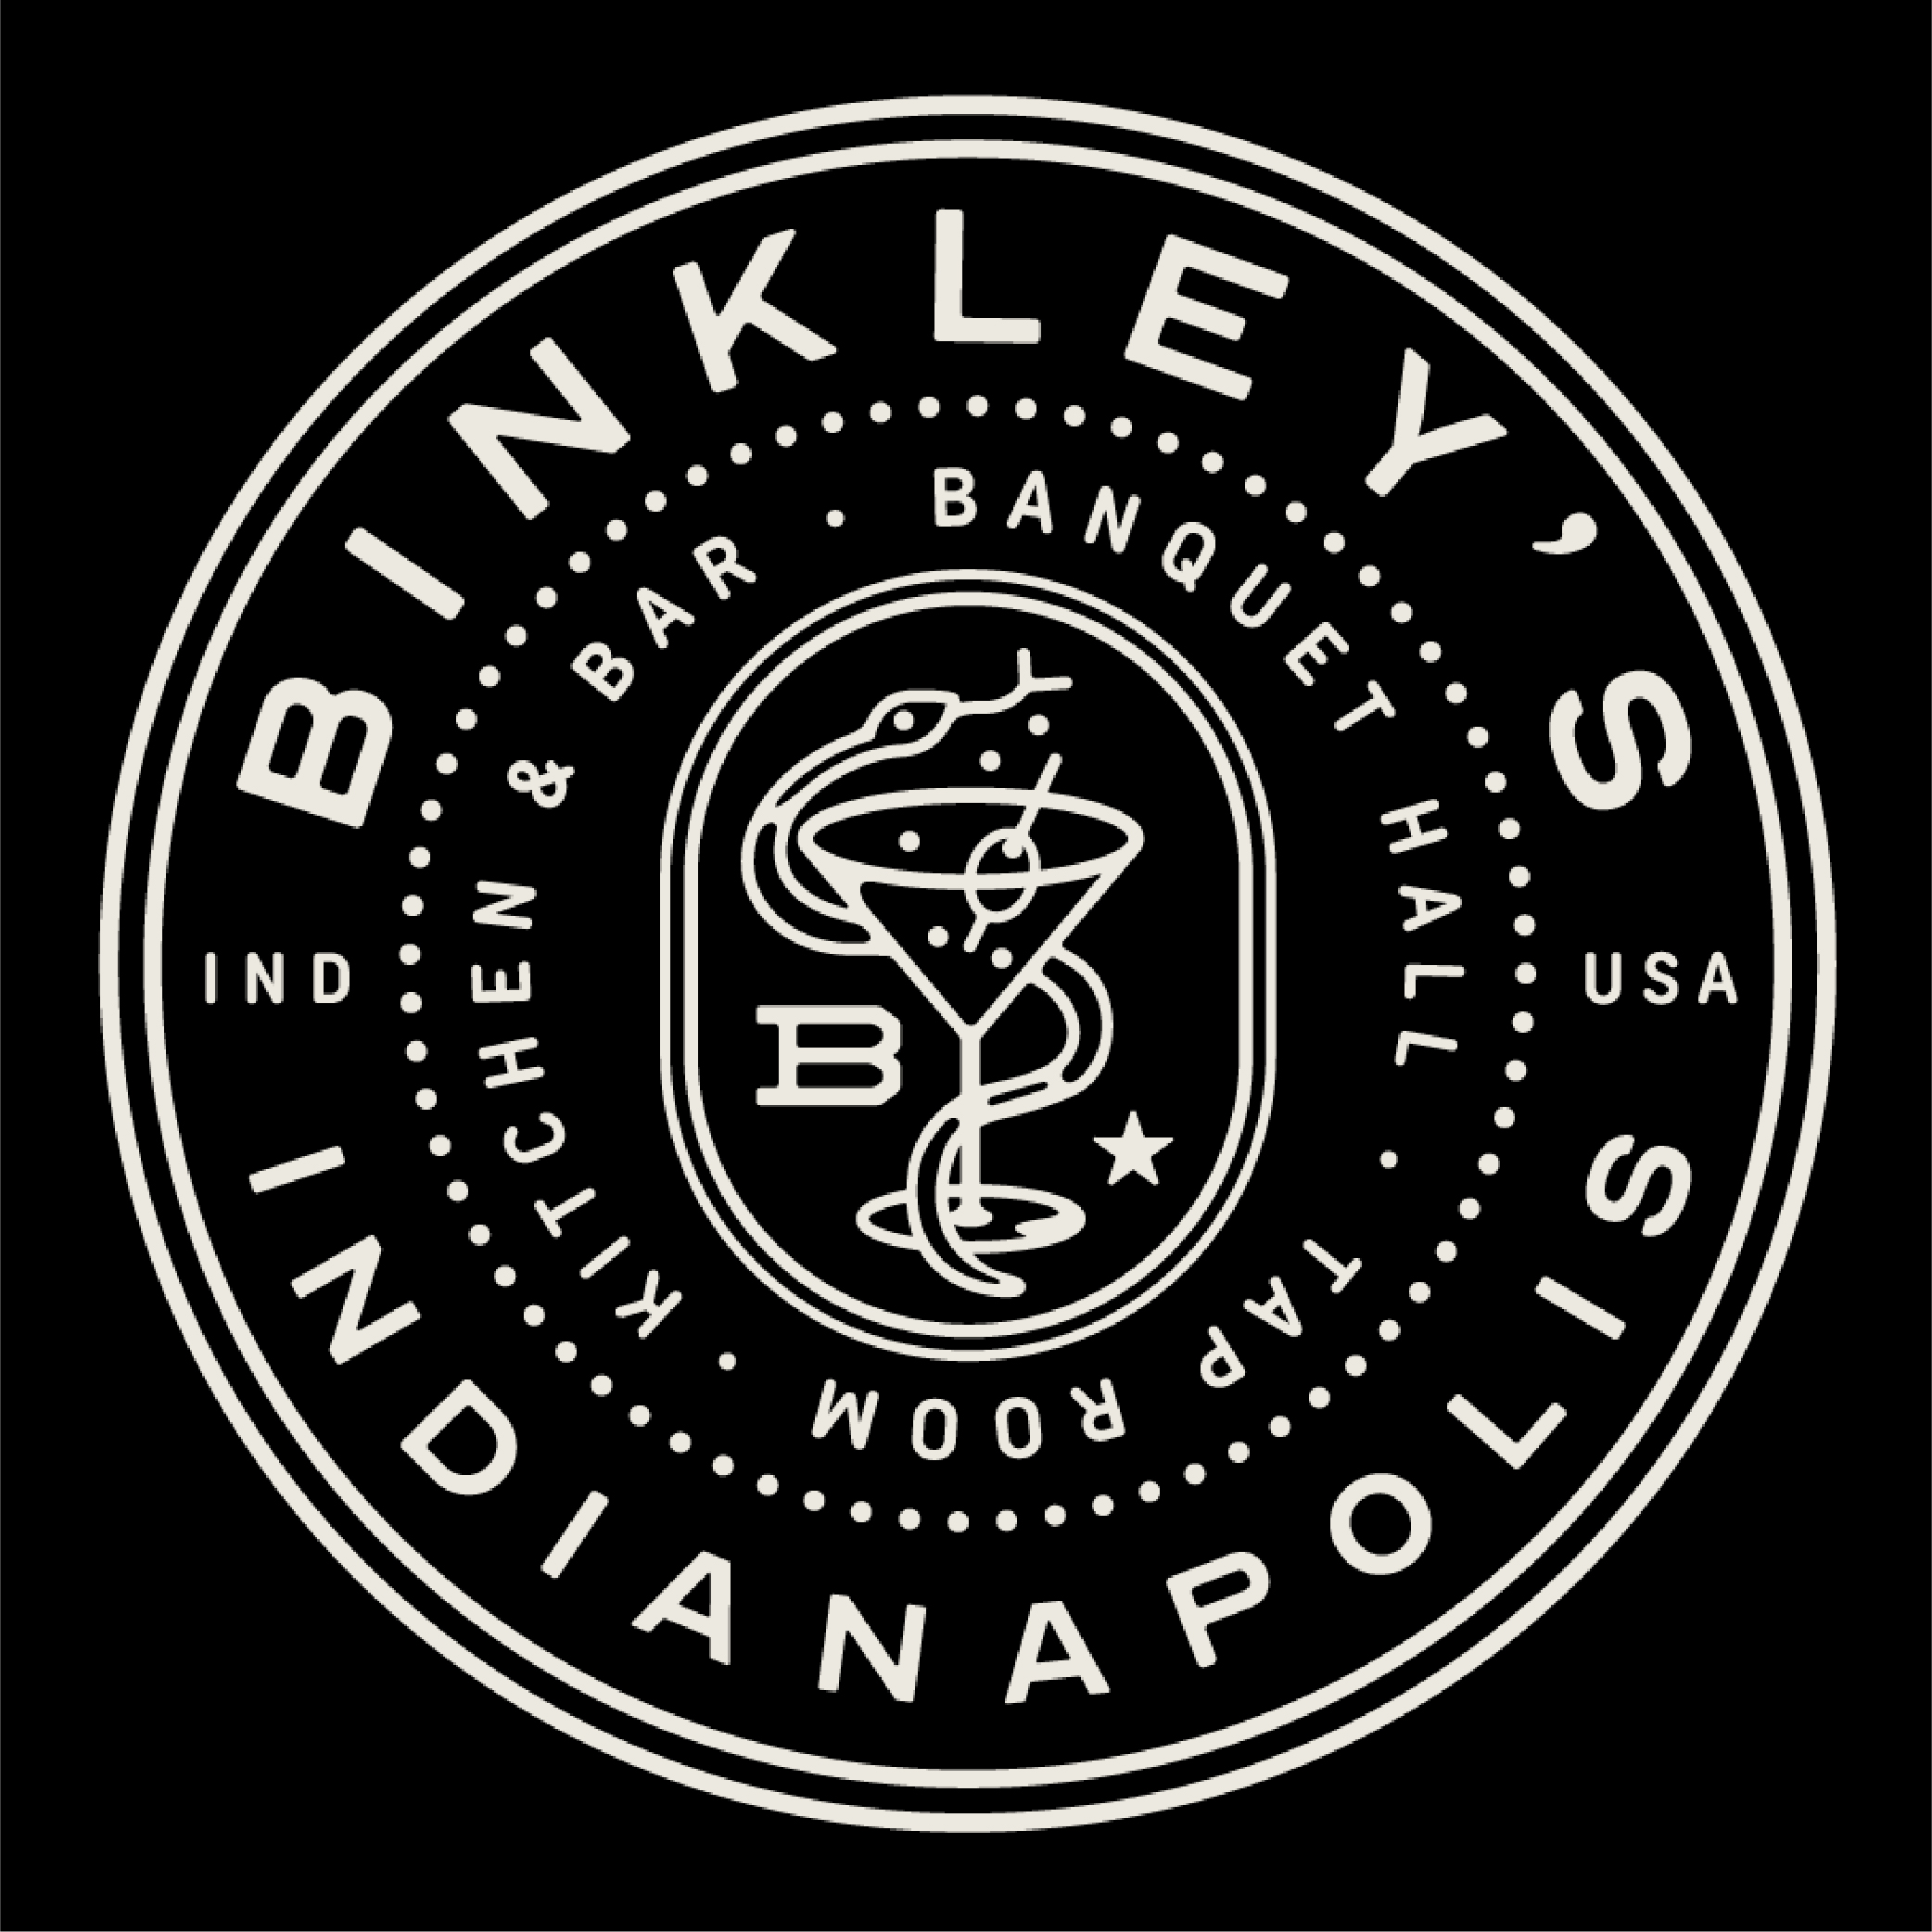 Binkley's Kitchen & Bar